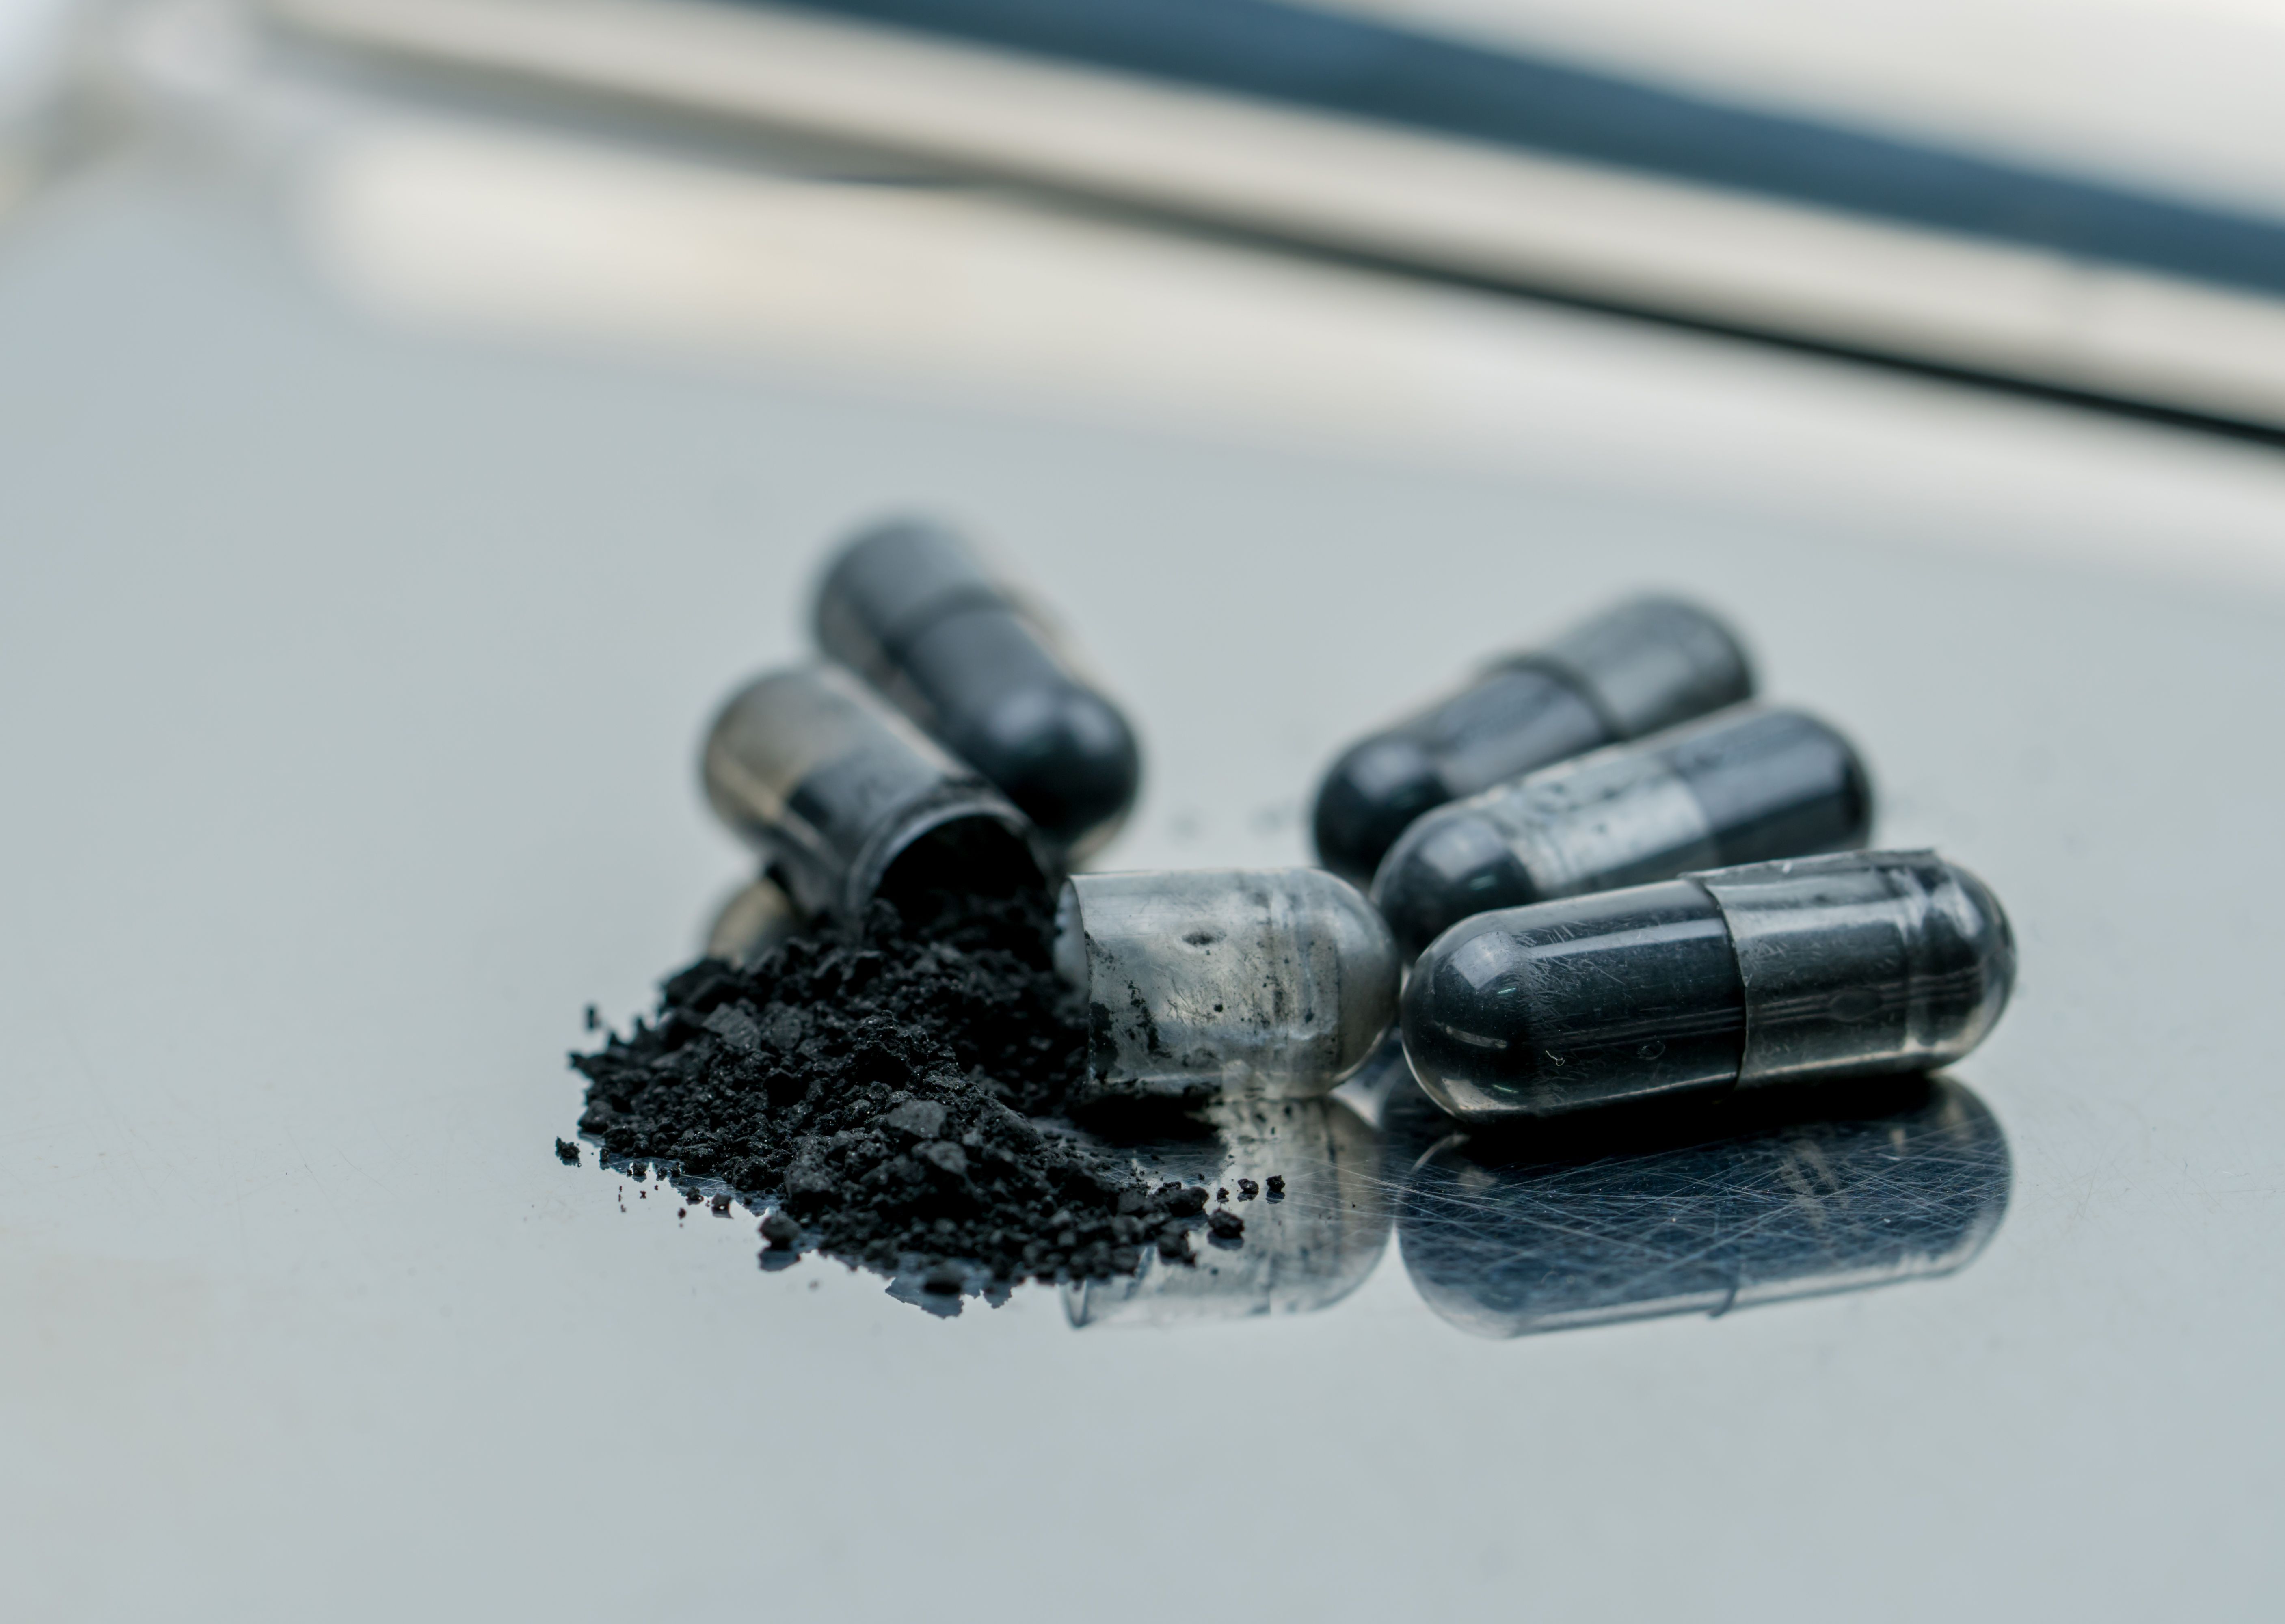 Farmacialidades - El carbón activado se usa comúnmente